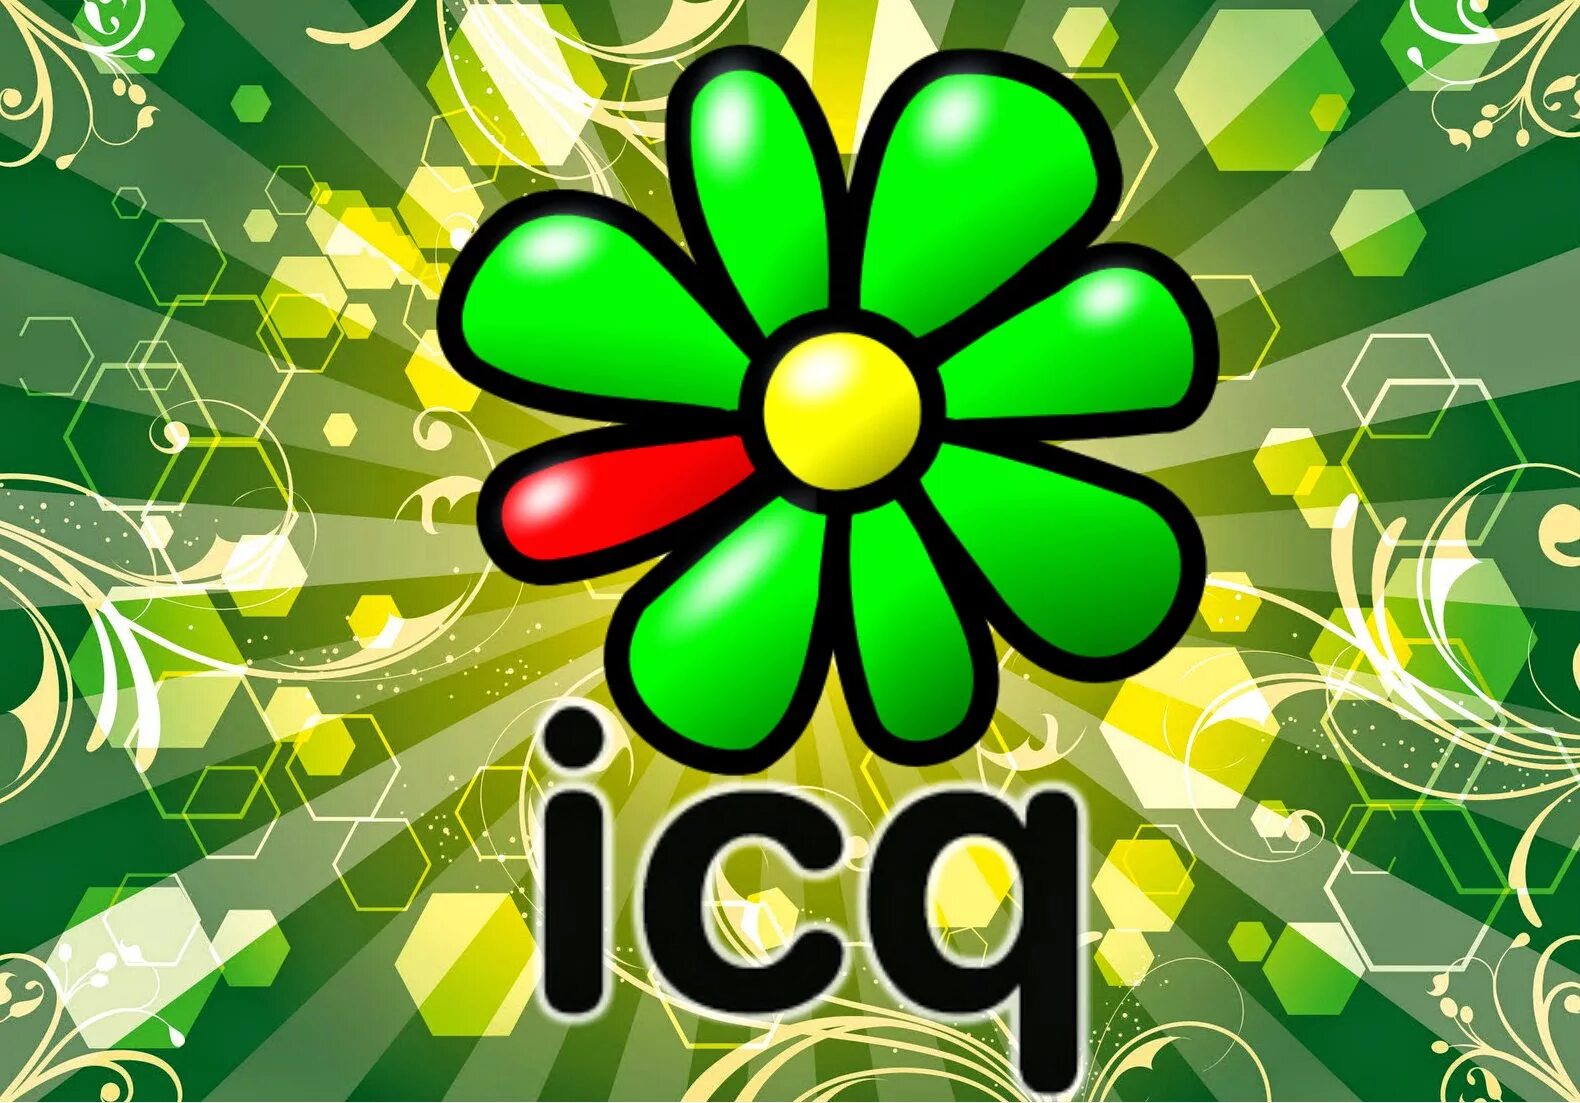 ICQ. ICQ логотип. ICQ фото. Картинки для аськи. Icq мессенджер